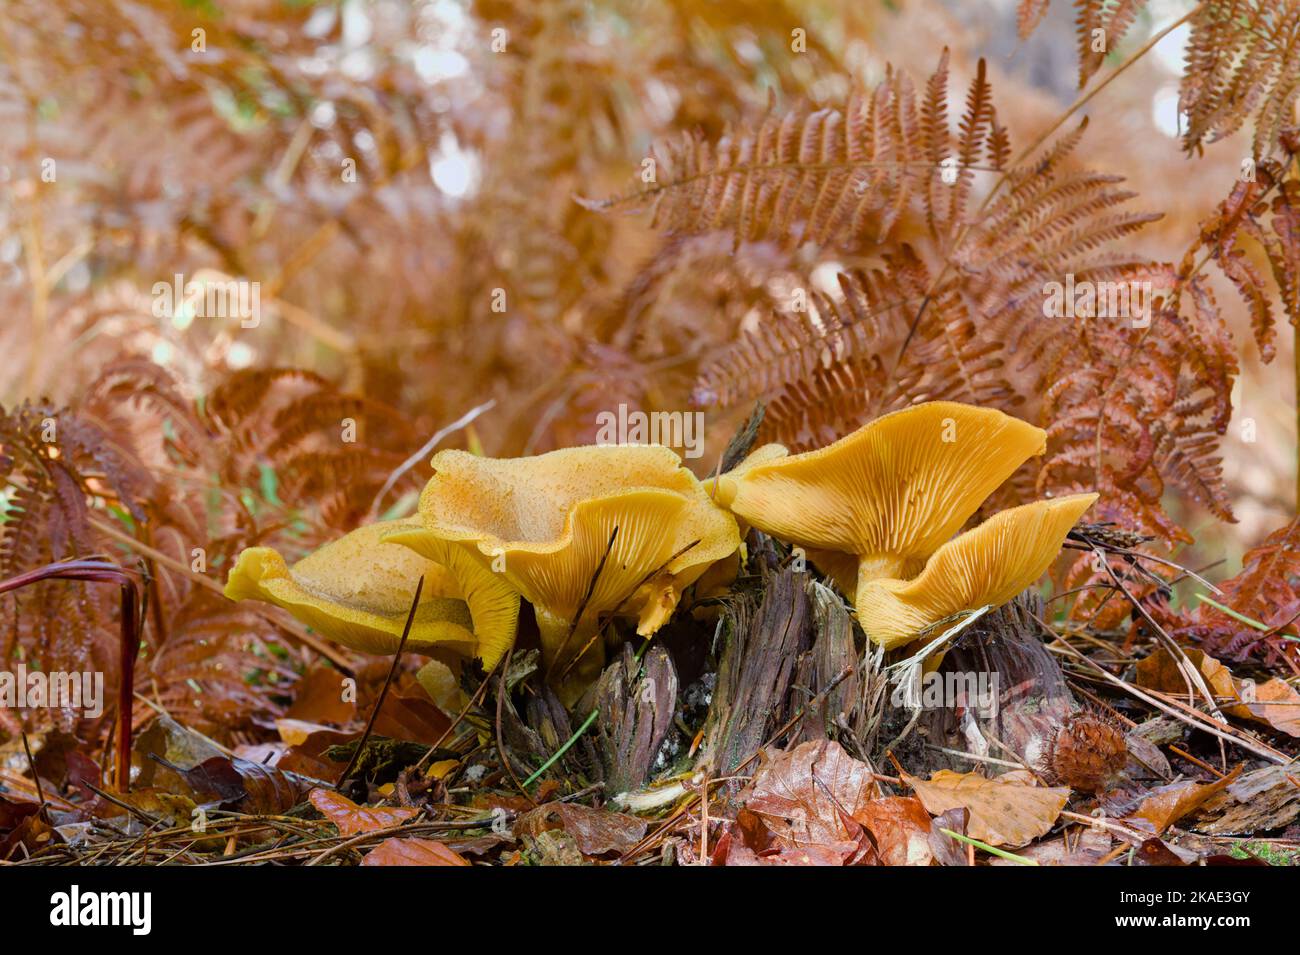 Group Of False Chanterelle Mushrooms Growing On A Tree Stump ON The Forest Floor Amongst Dead Bracken, Hygrophoropsis aurantiaca, New Forest UK Stock Photo